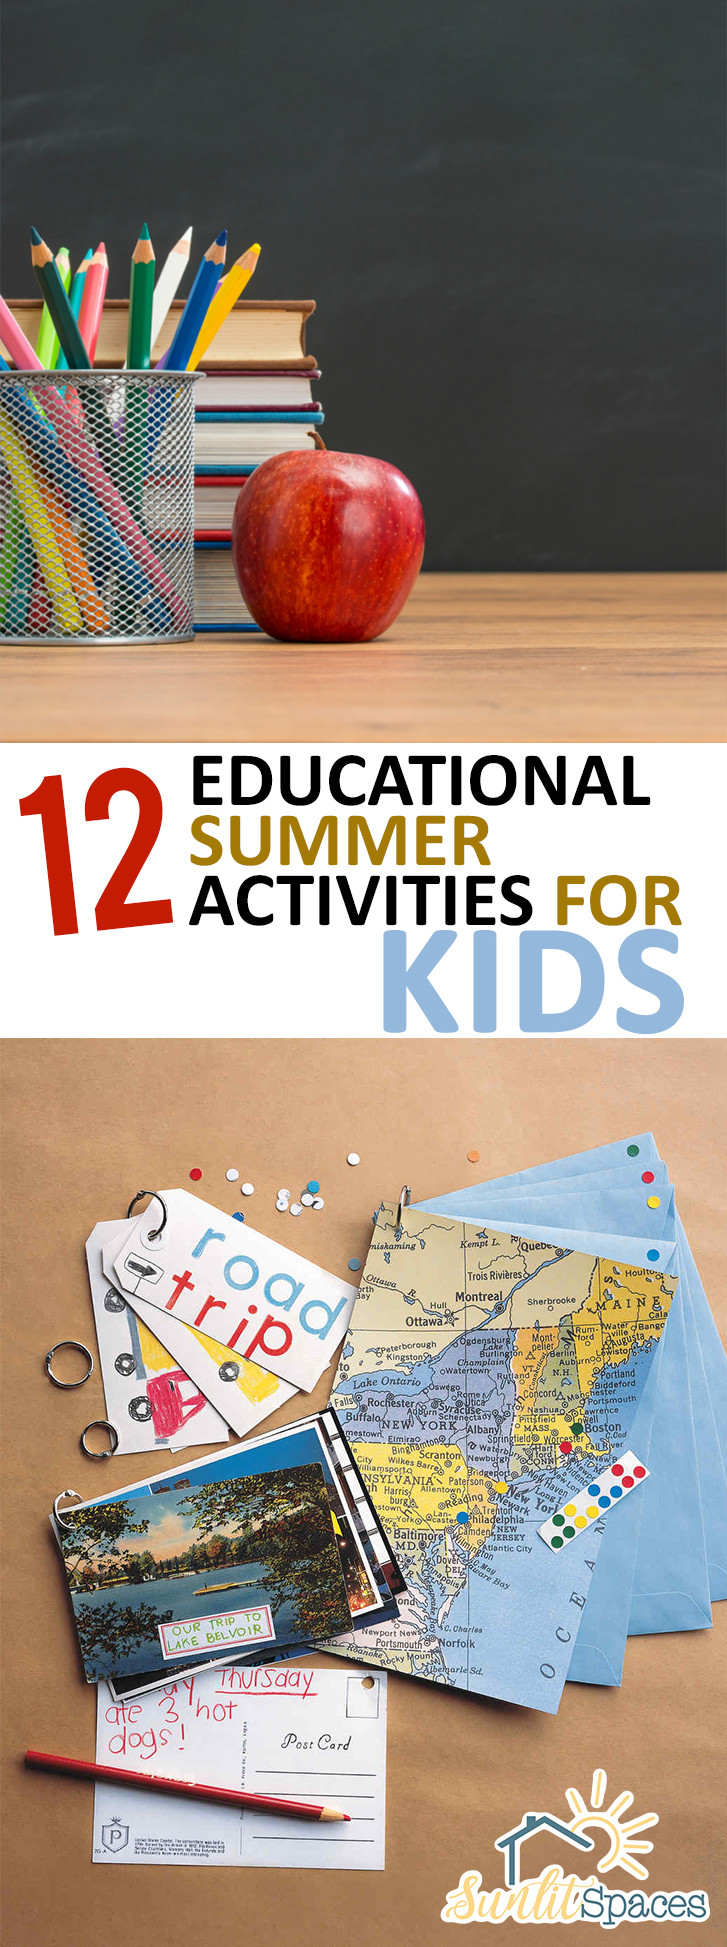 Summer Educational Activities
 12 Educational Summer Activities for Kids